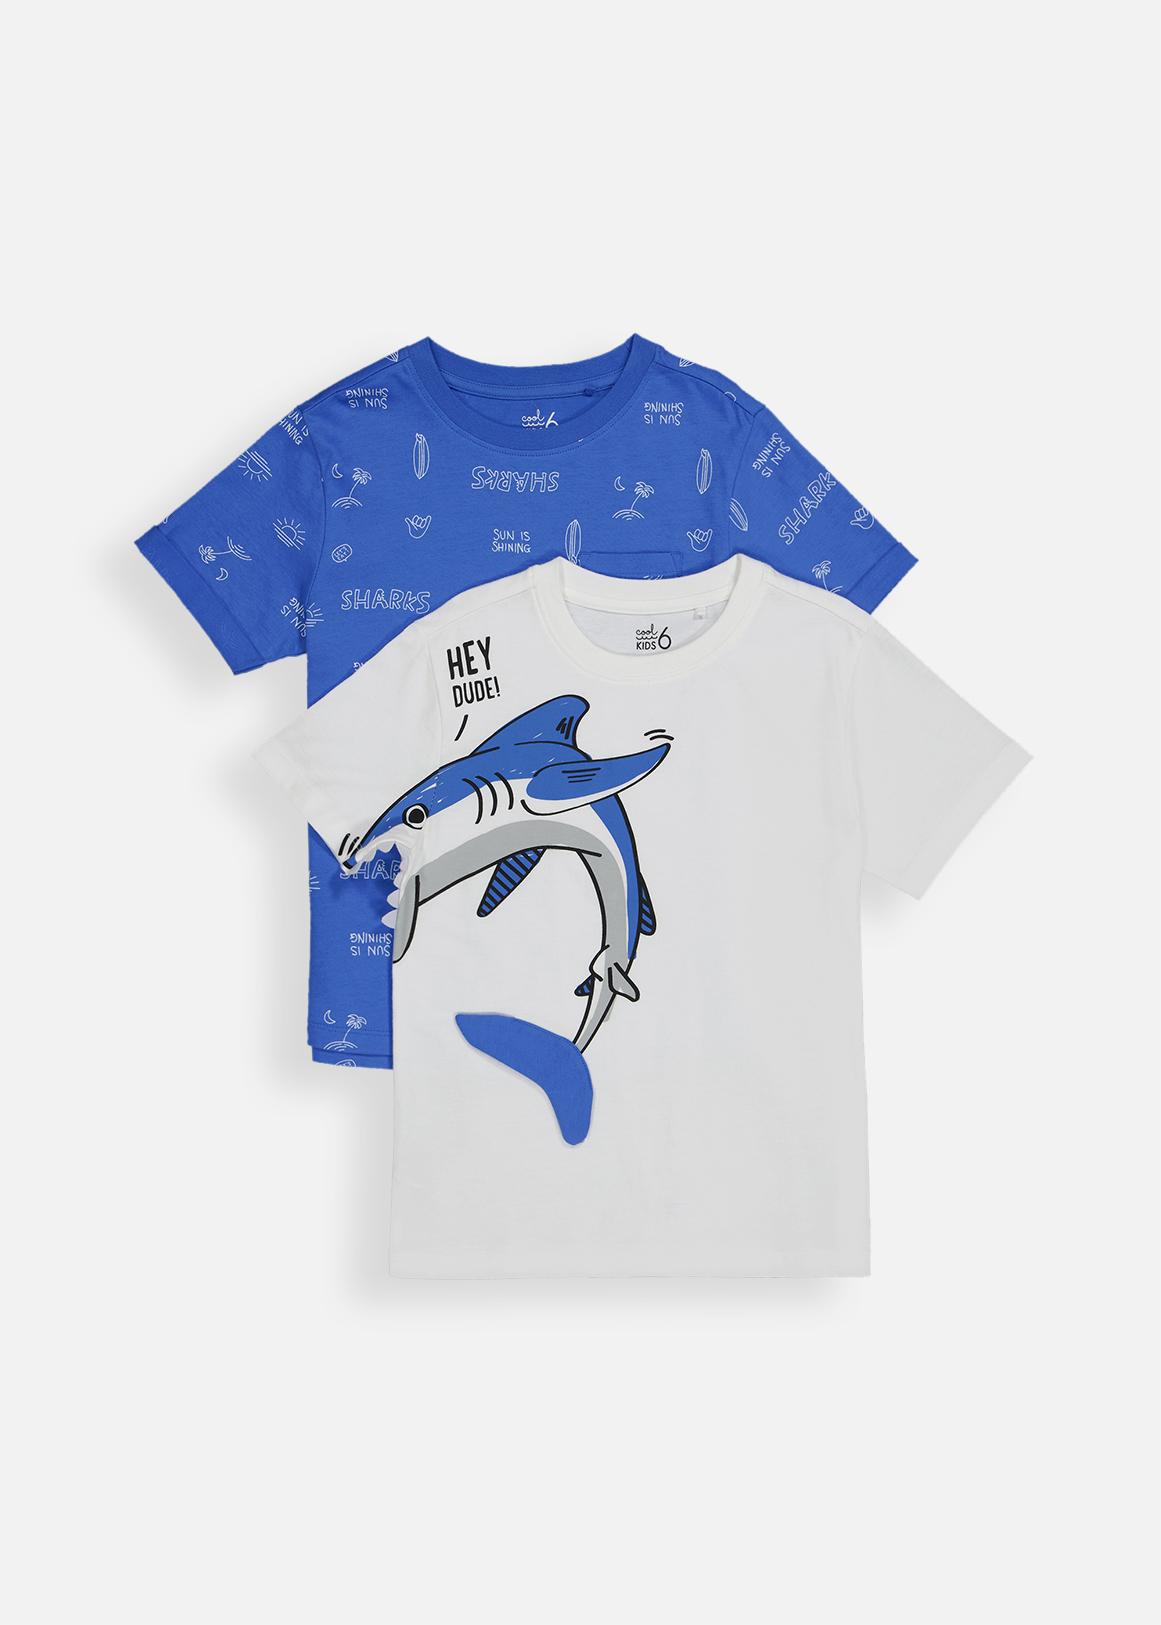 https://assets.woolworthsstatic.co.za/Shark-Print-Cotton-T-shirts-2-Pack-X-WHITE-507337770.jpg?V=vWw%40&o=eyJidWNrZXQiOiJ3dy1vbmxpbmUtaW1hZ2UtcmVzaXplIiwia2V5IjoiaW1hZ2VzL2VsYXN0aWNlcmEvcHJvZHVjdHMvaGVyby8yMDIzLTA5LTI4LzUwNzMzNzc3MF9YV0hJVEVfaGVyby5qcGcifQ&q=75